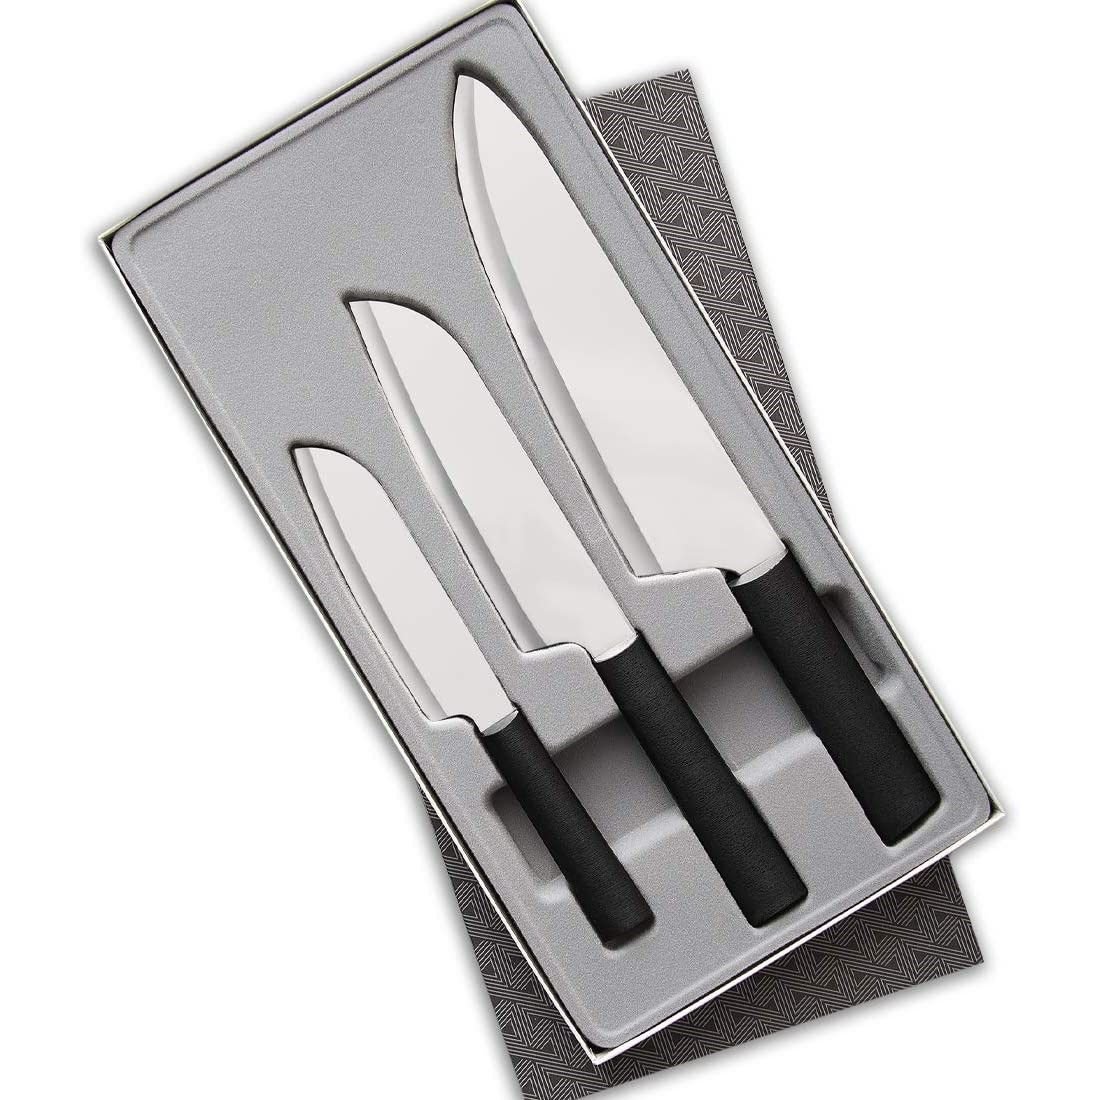 Rada Cutlery Black Carving Fork